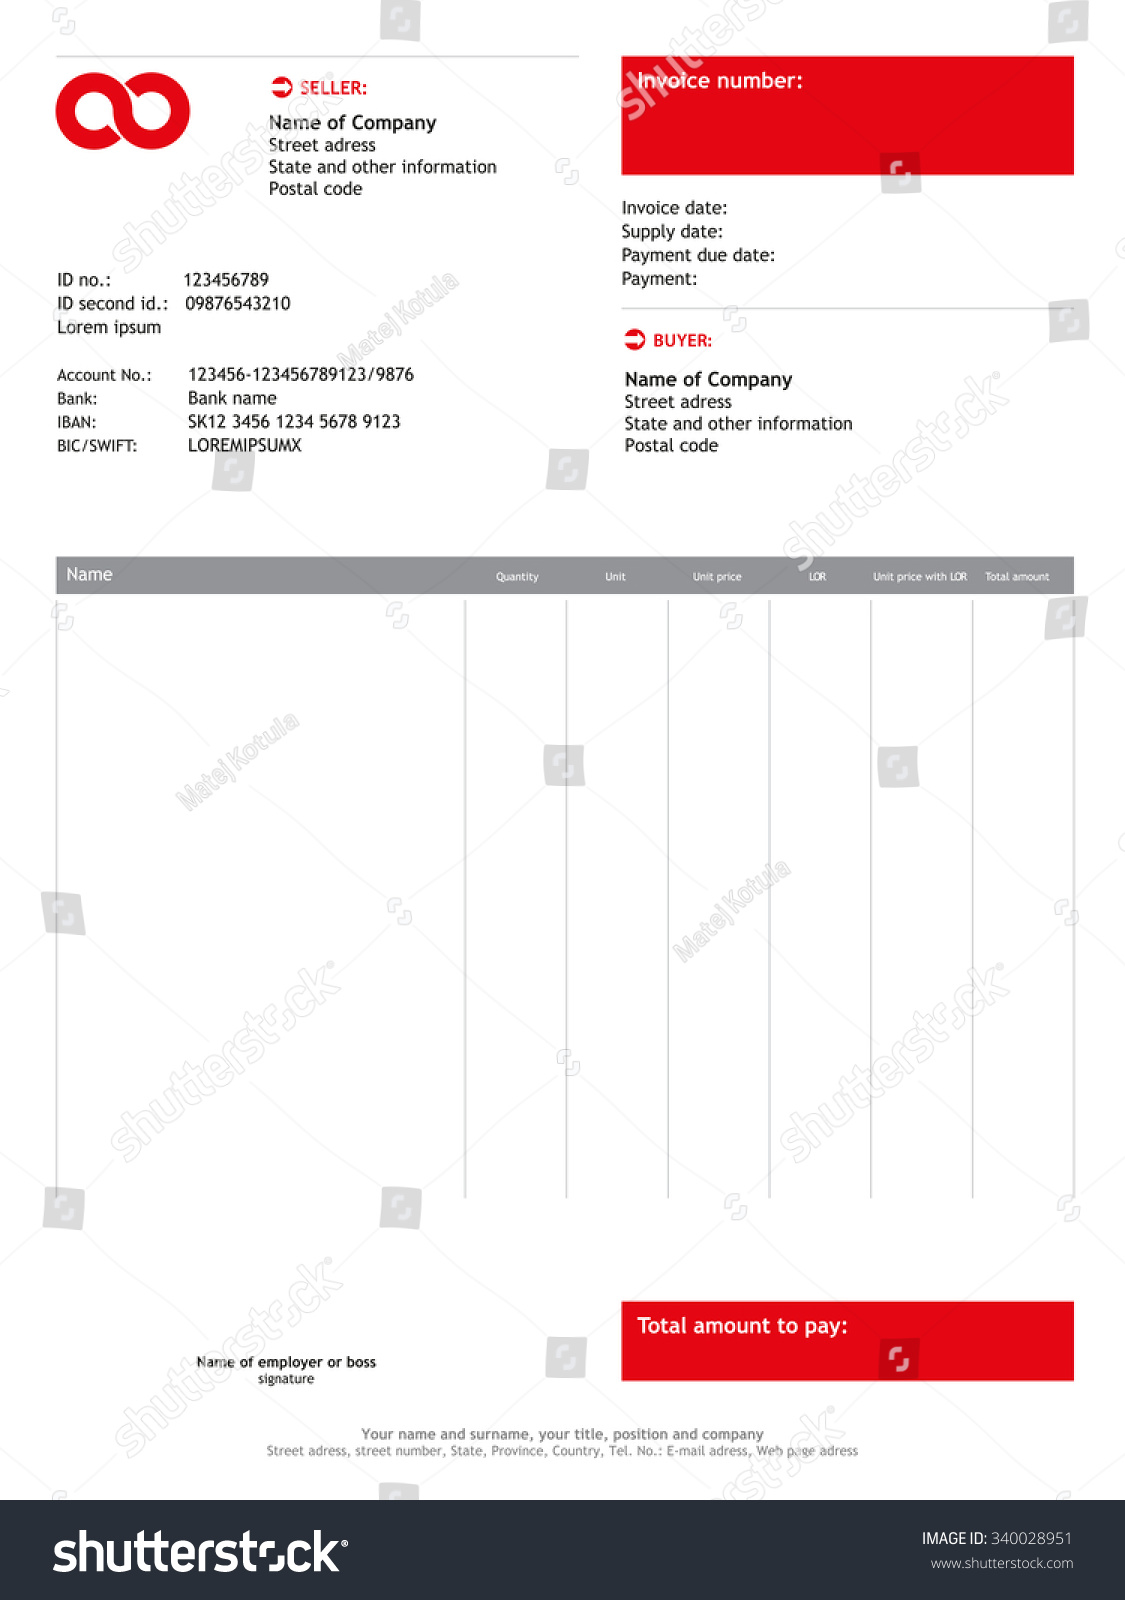 Vector Minimalist Invoice / Business Template 340028951 : Shutterstock